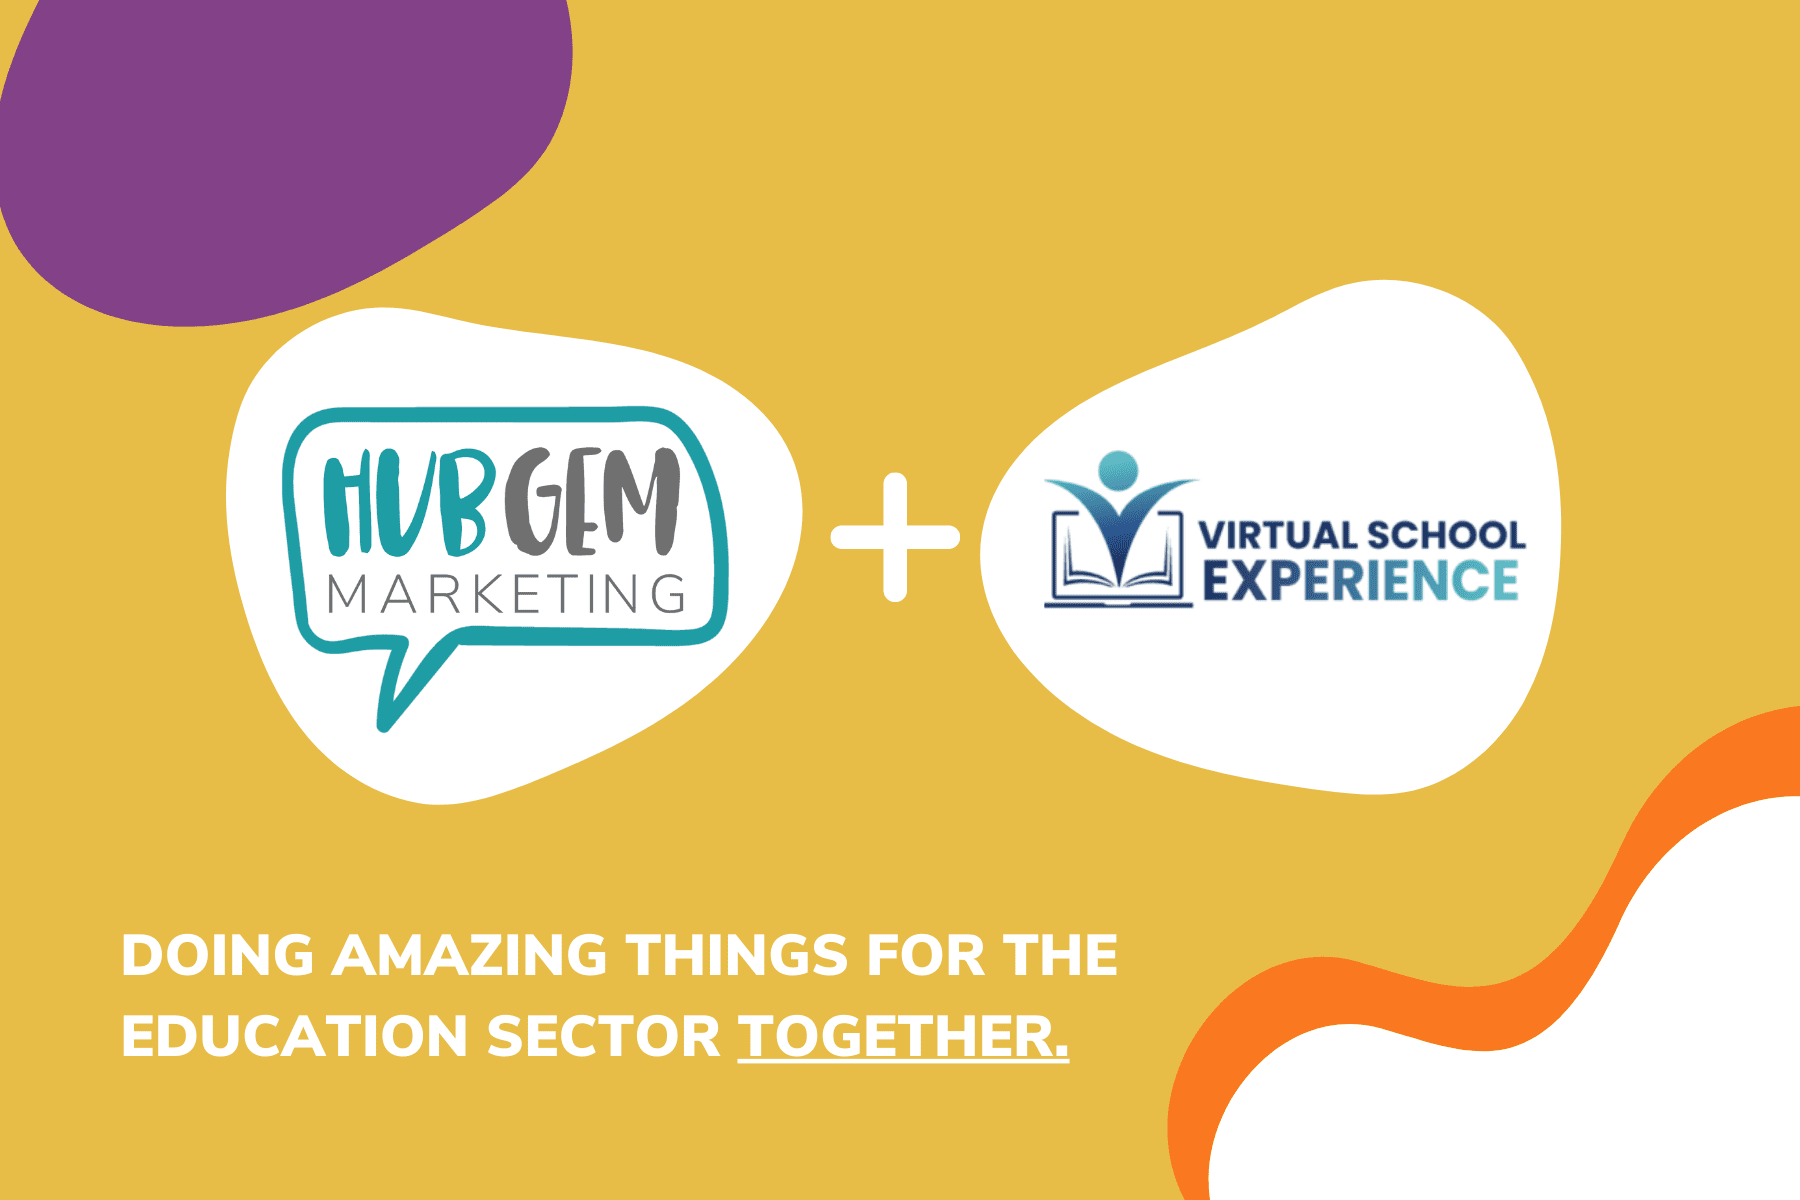 HubGem Marketing and Virtual School Experience Partnership